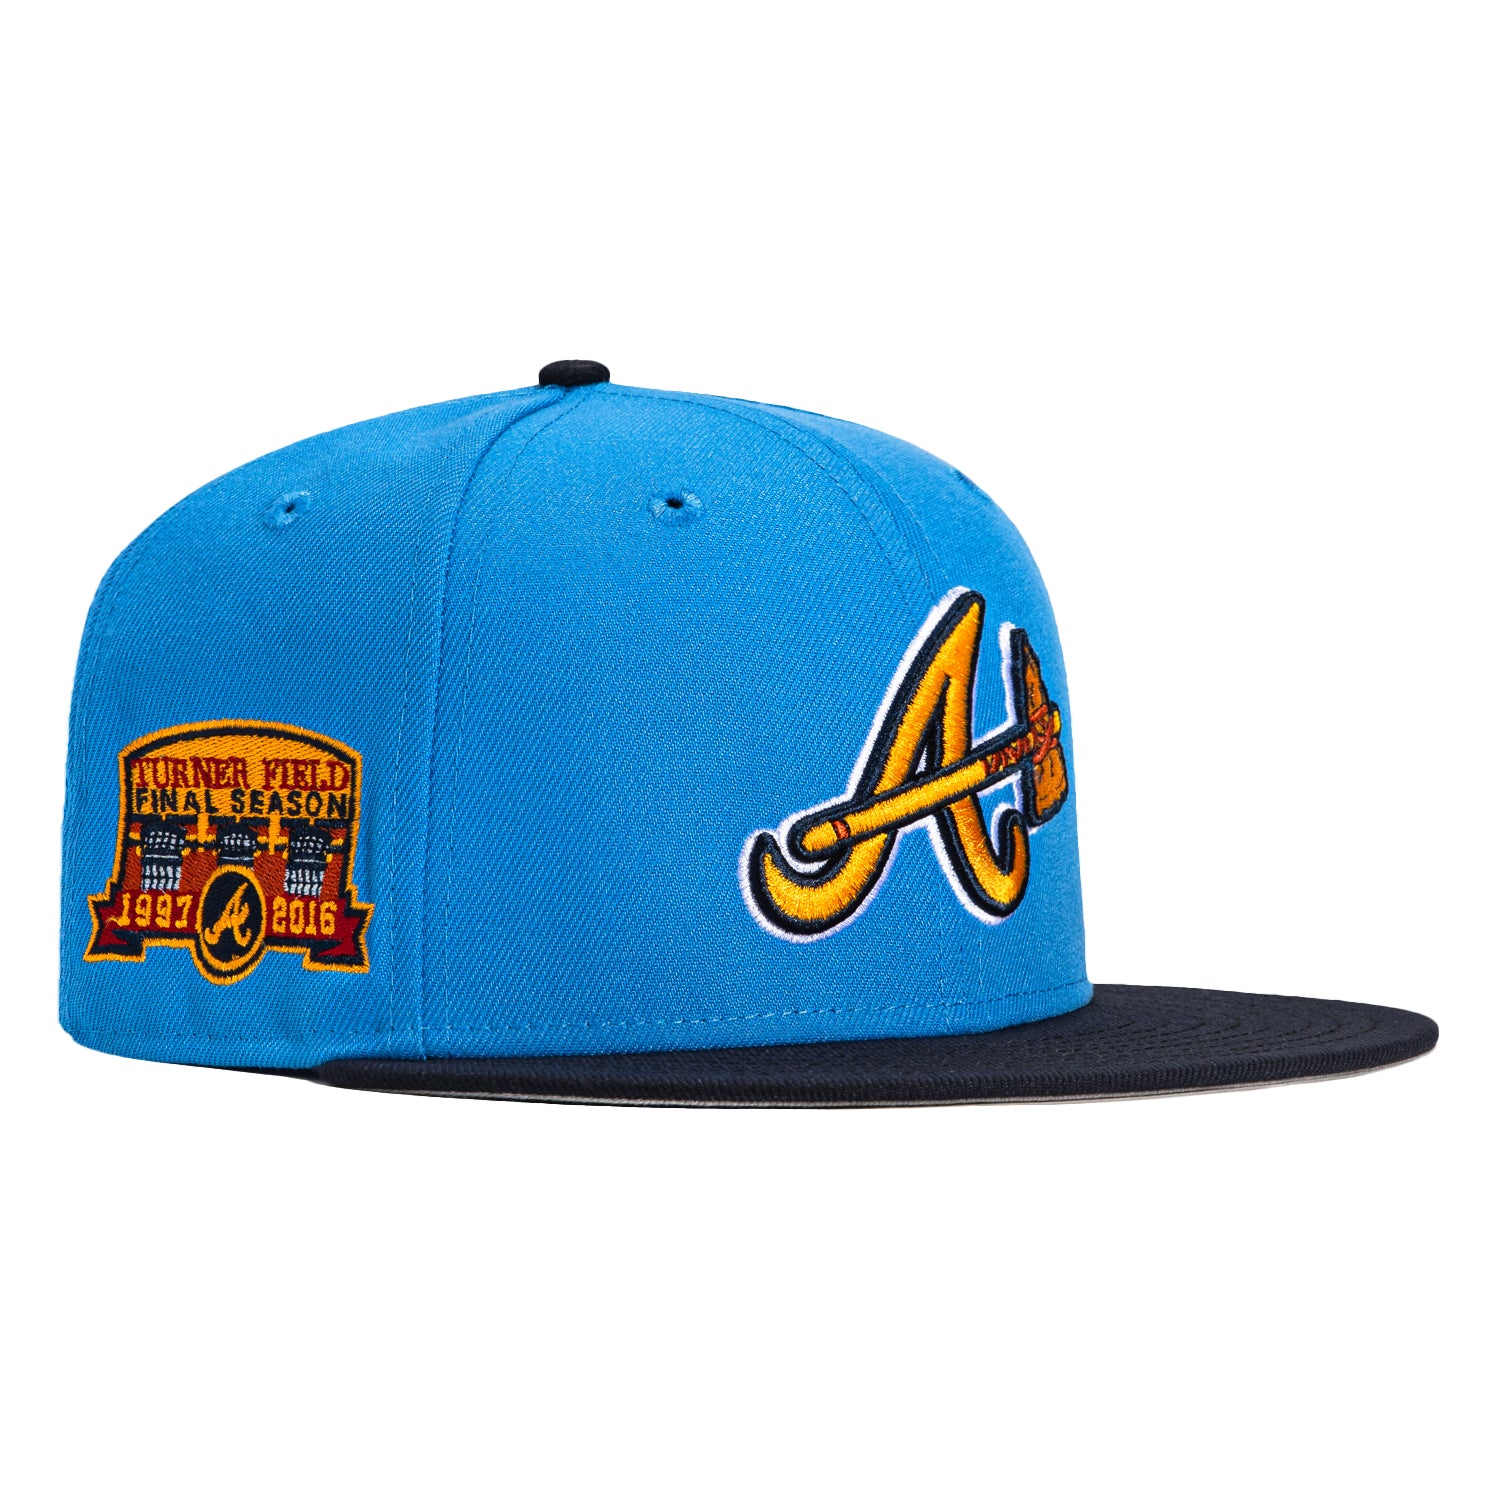 2016 New York Mets Alternate 2 hat